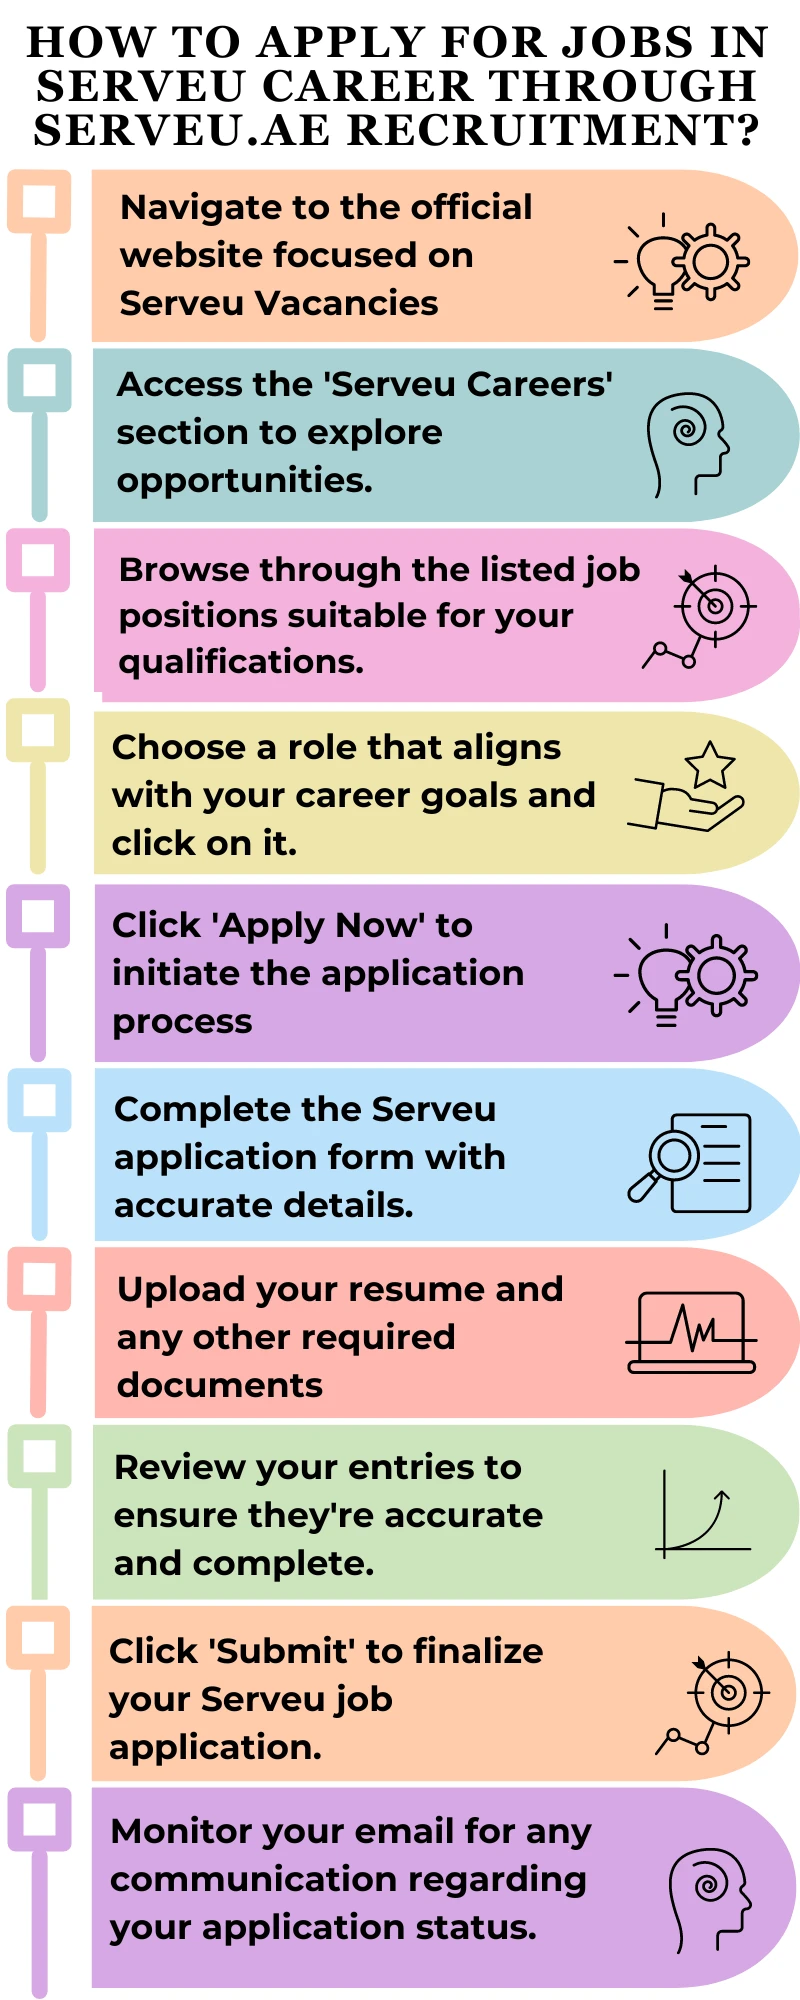 How to Apply for Jobs in Serveu Career through serveu.ae recruitment_